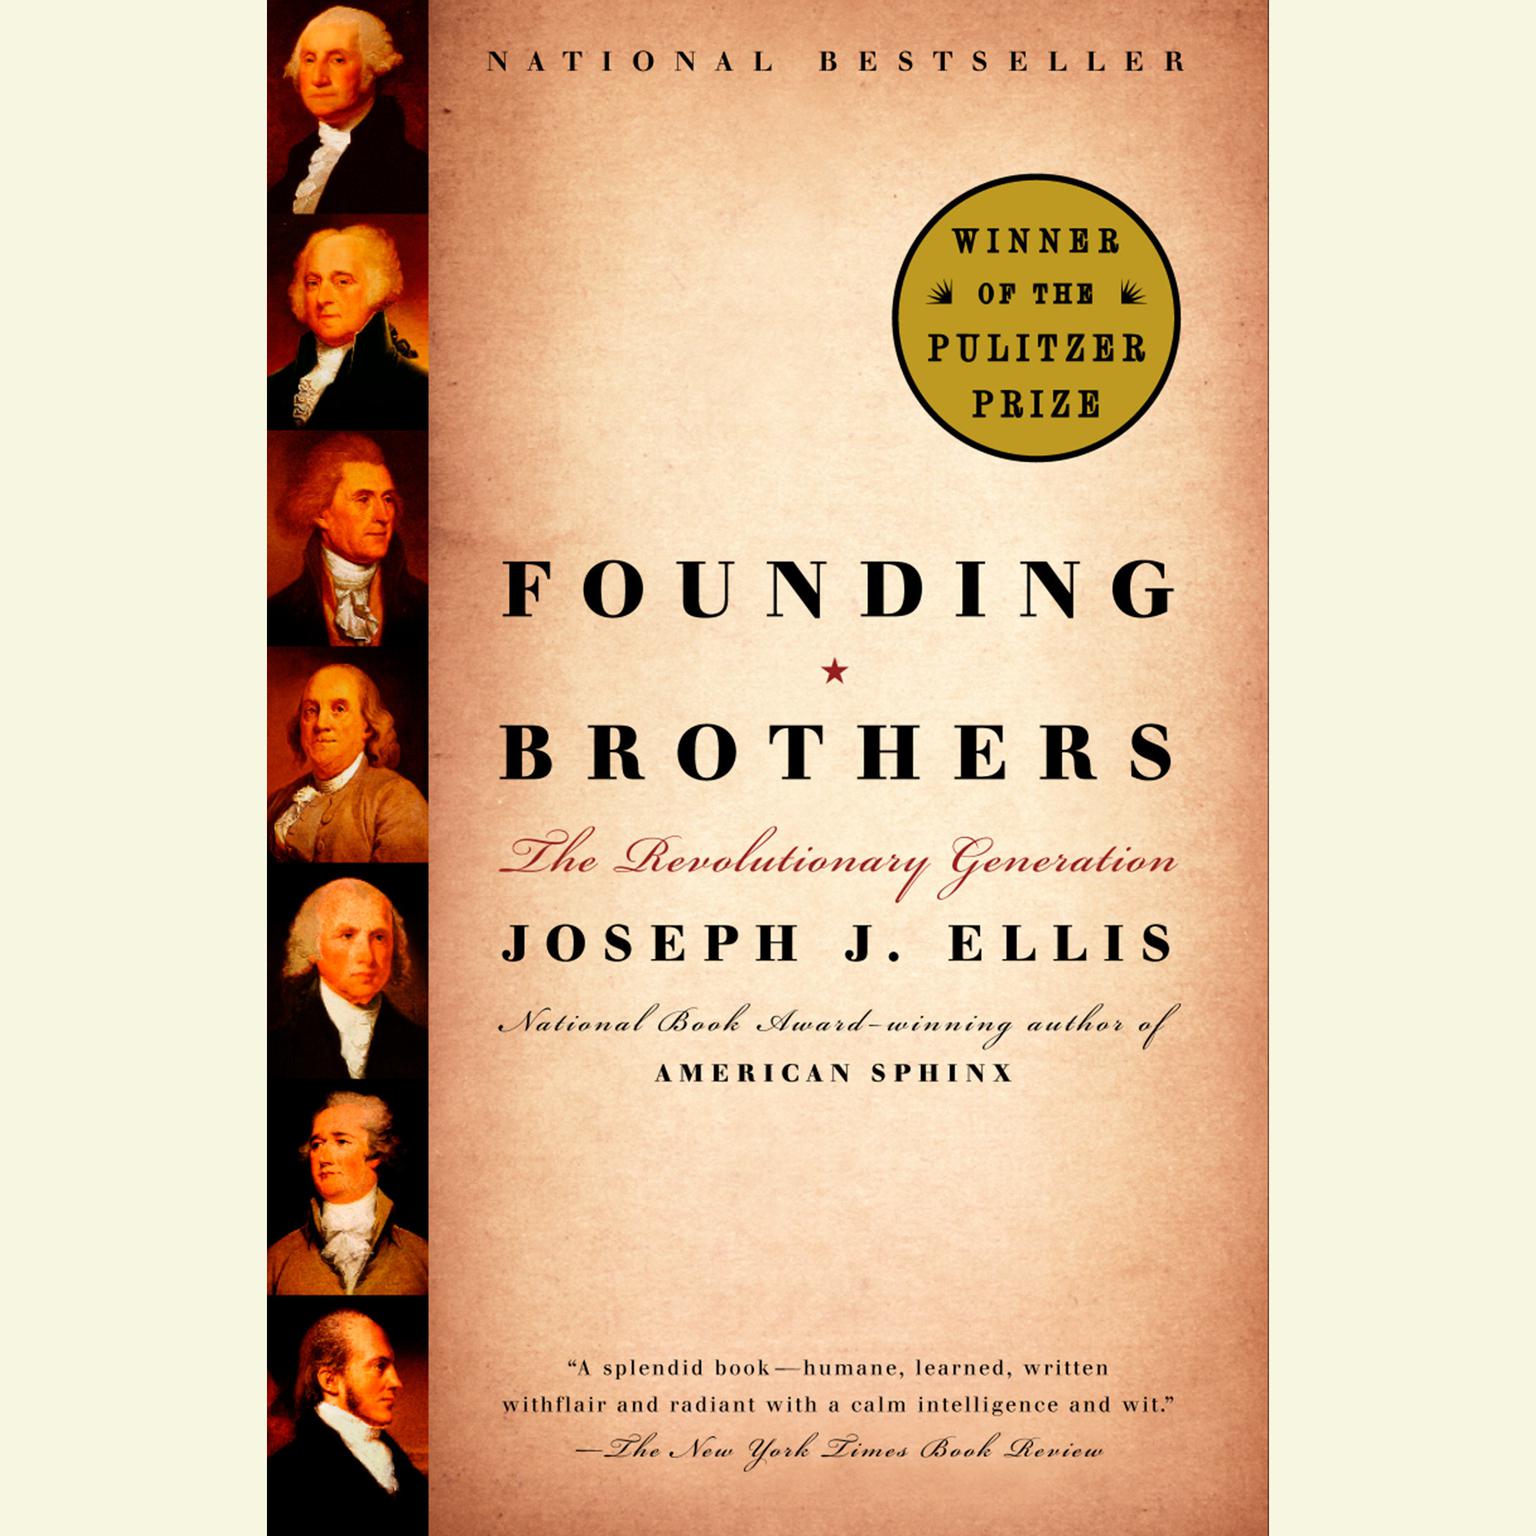 Founding Brothers: The Revolutionary Generation (Pulitzer Prize Winner) Audiobook, by Joseph J. Ellis